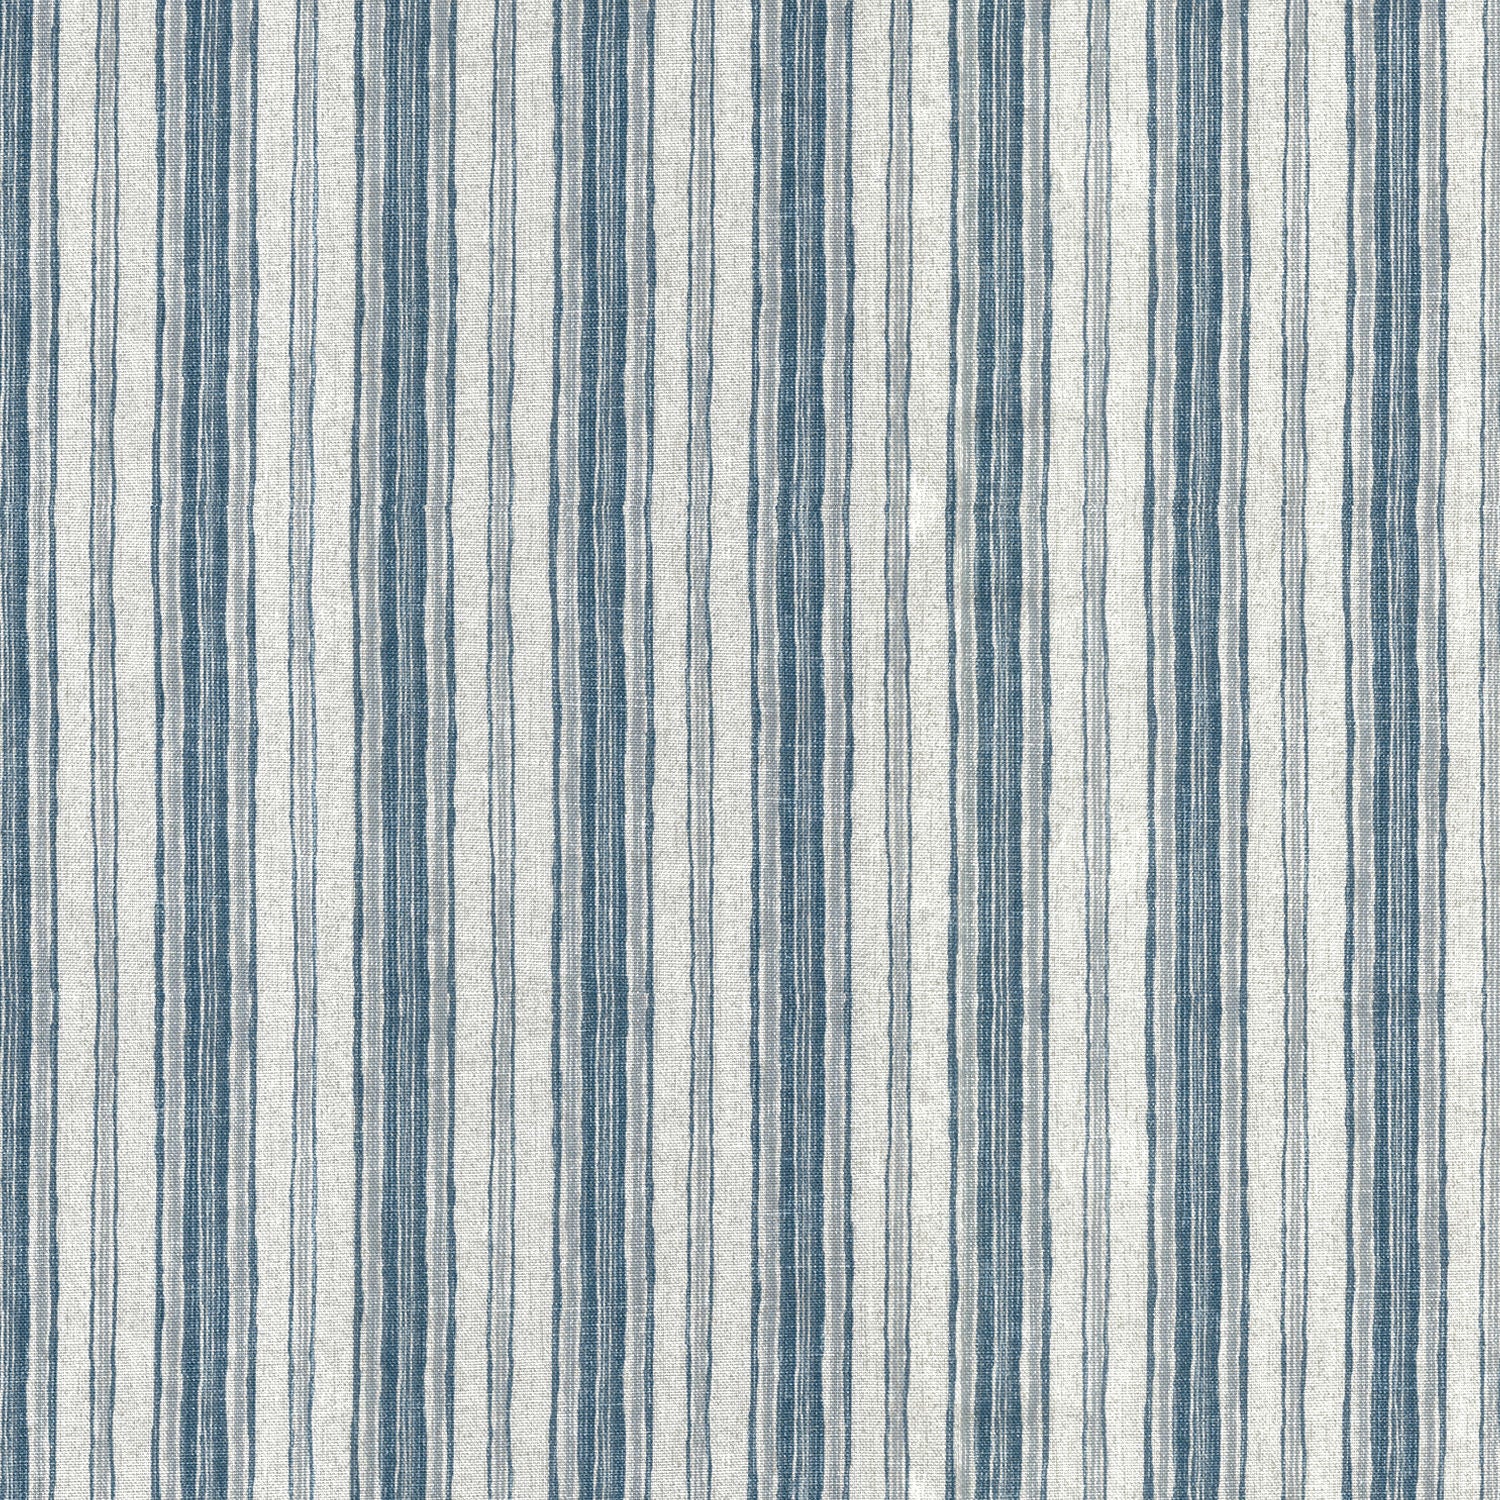 duvet cover in brunswick denim blue stripe